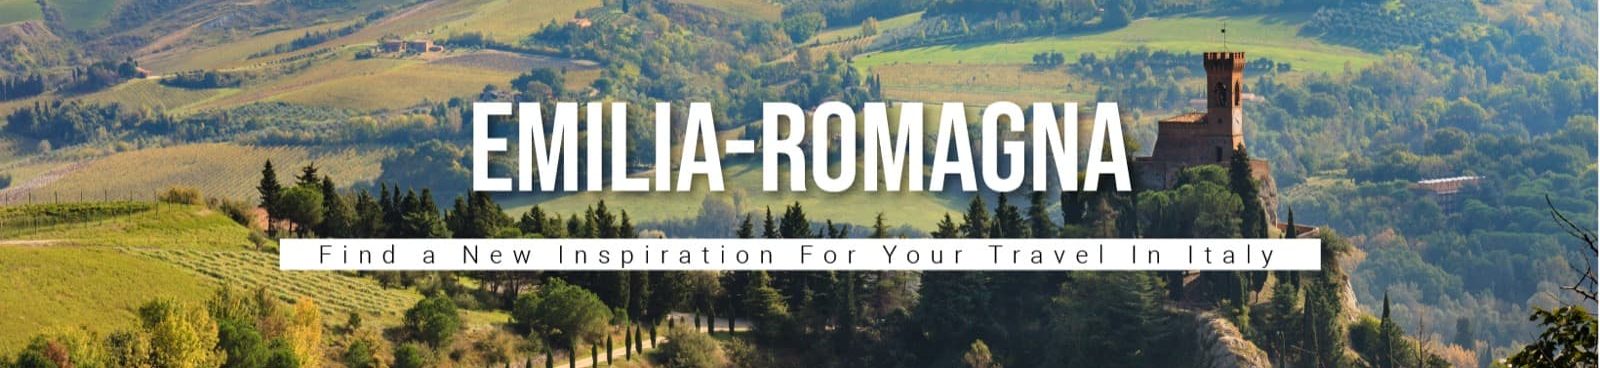 5 divertenti itinerari per scoprire l’Emilia Romagna